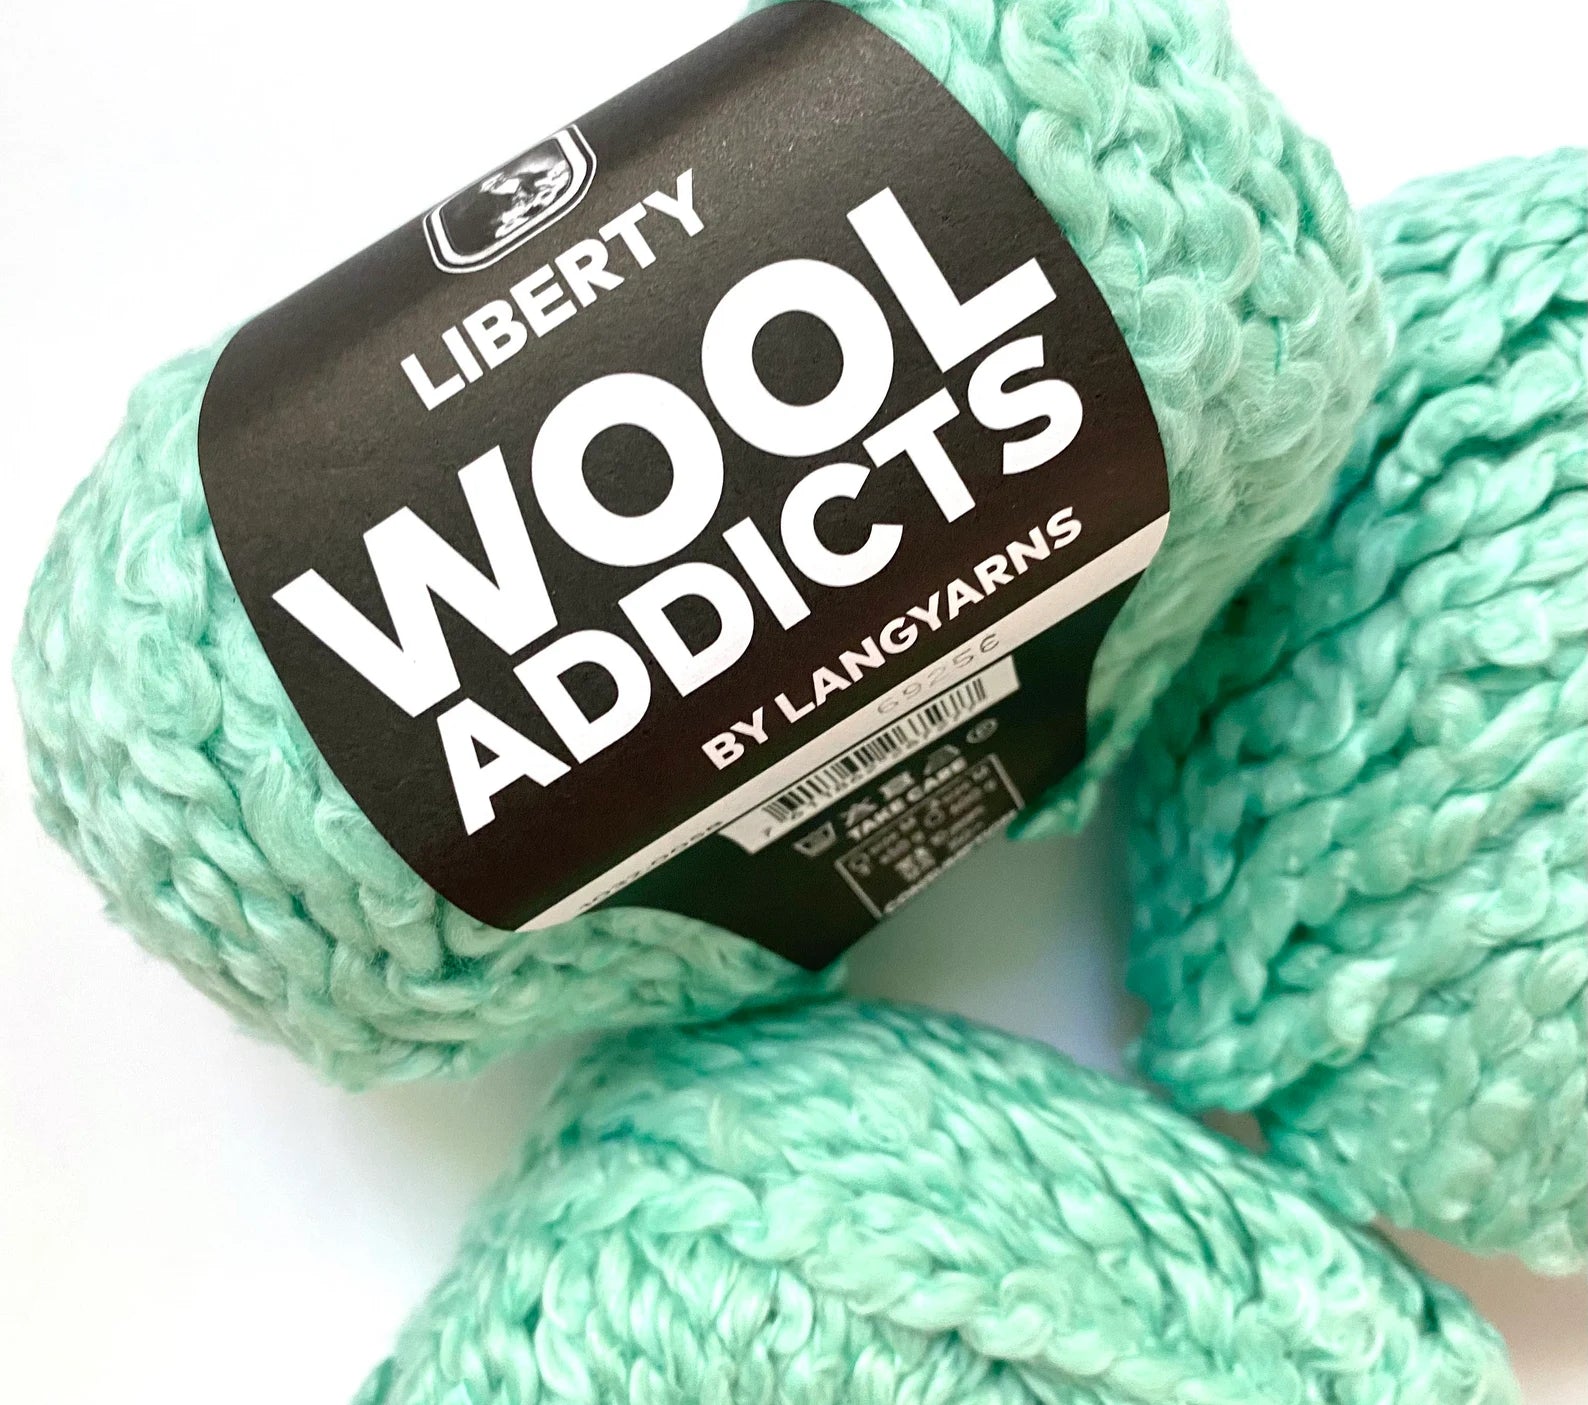 Rosy Green Wool Cheeky Merino Joy Yarn - ON SALE! - Colorful Yarns